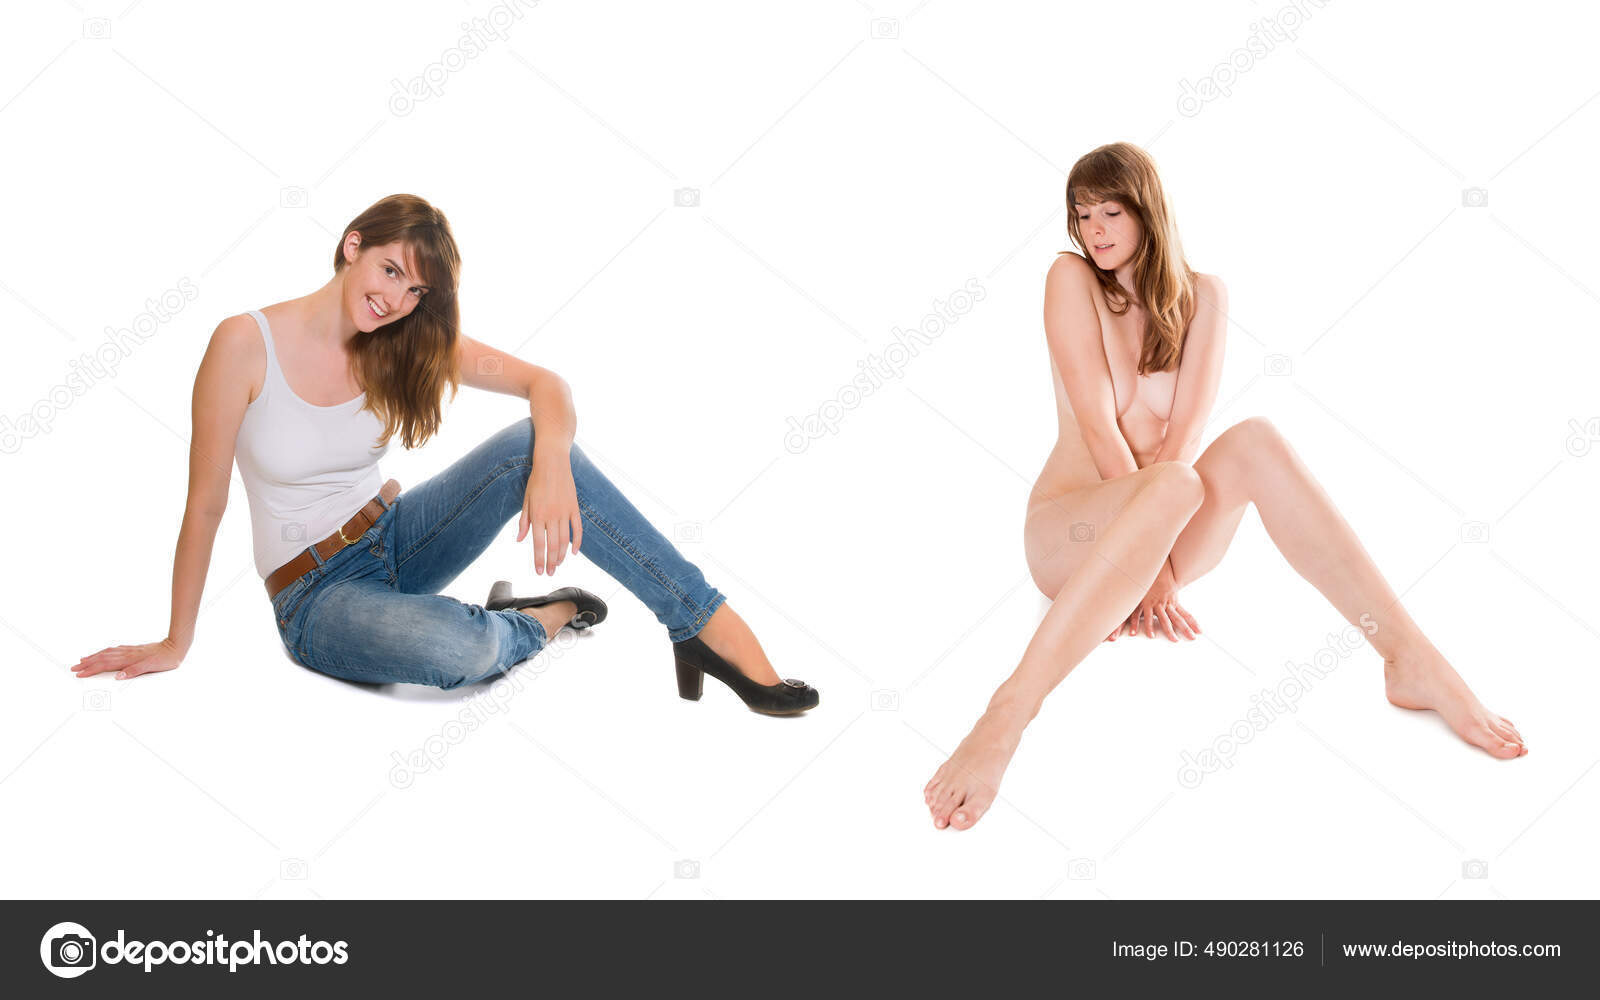 Casual nudity women